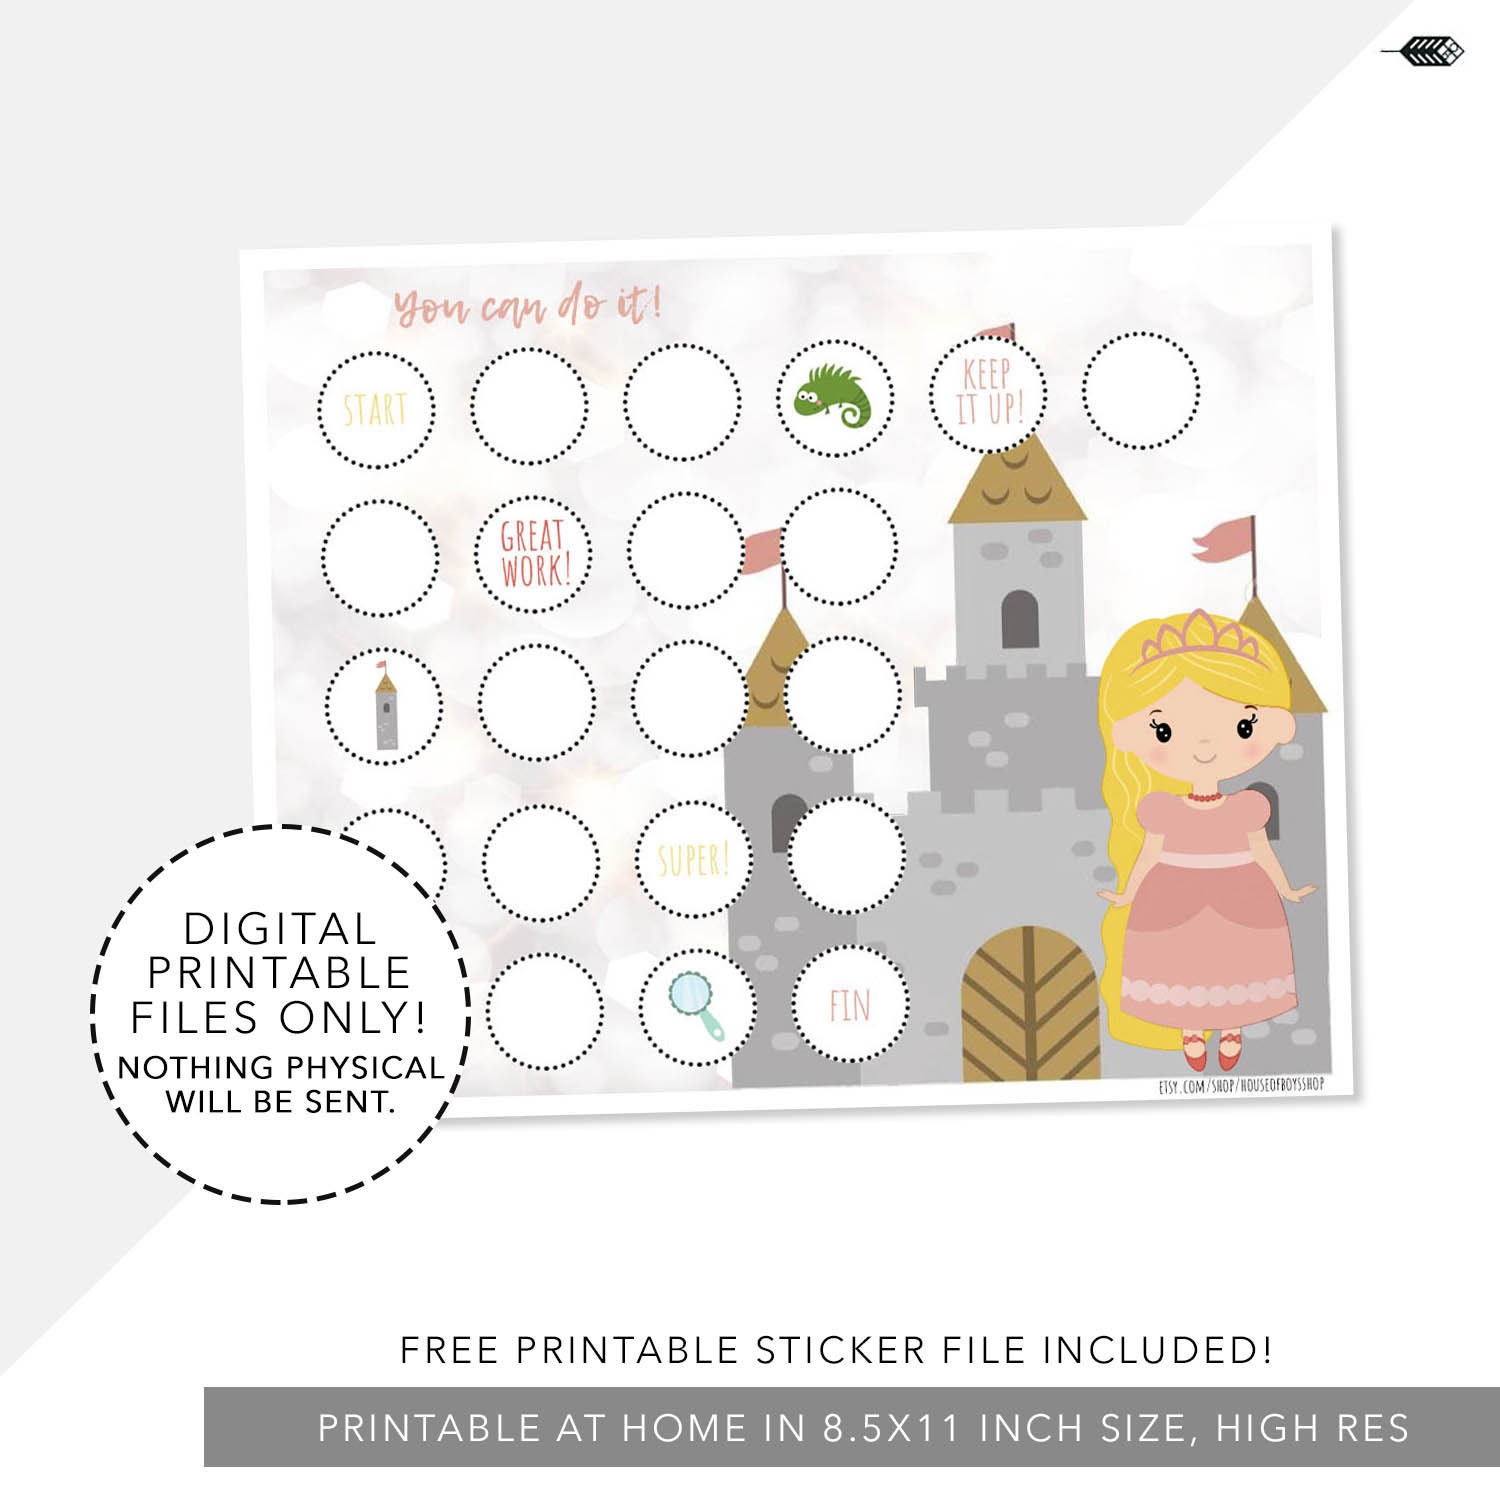 Princess Sticker Reward Chart